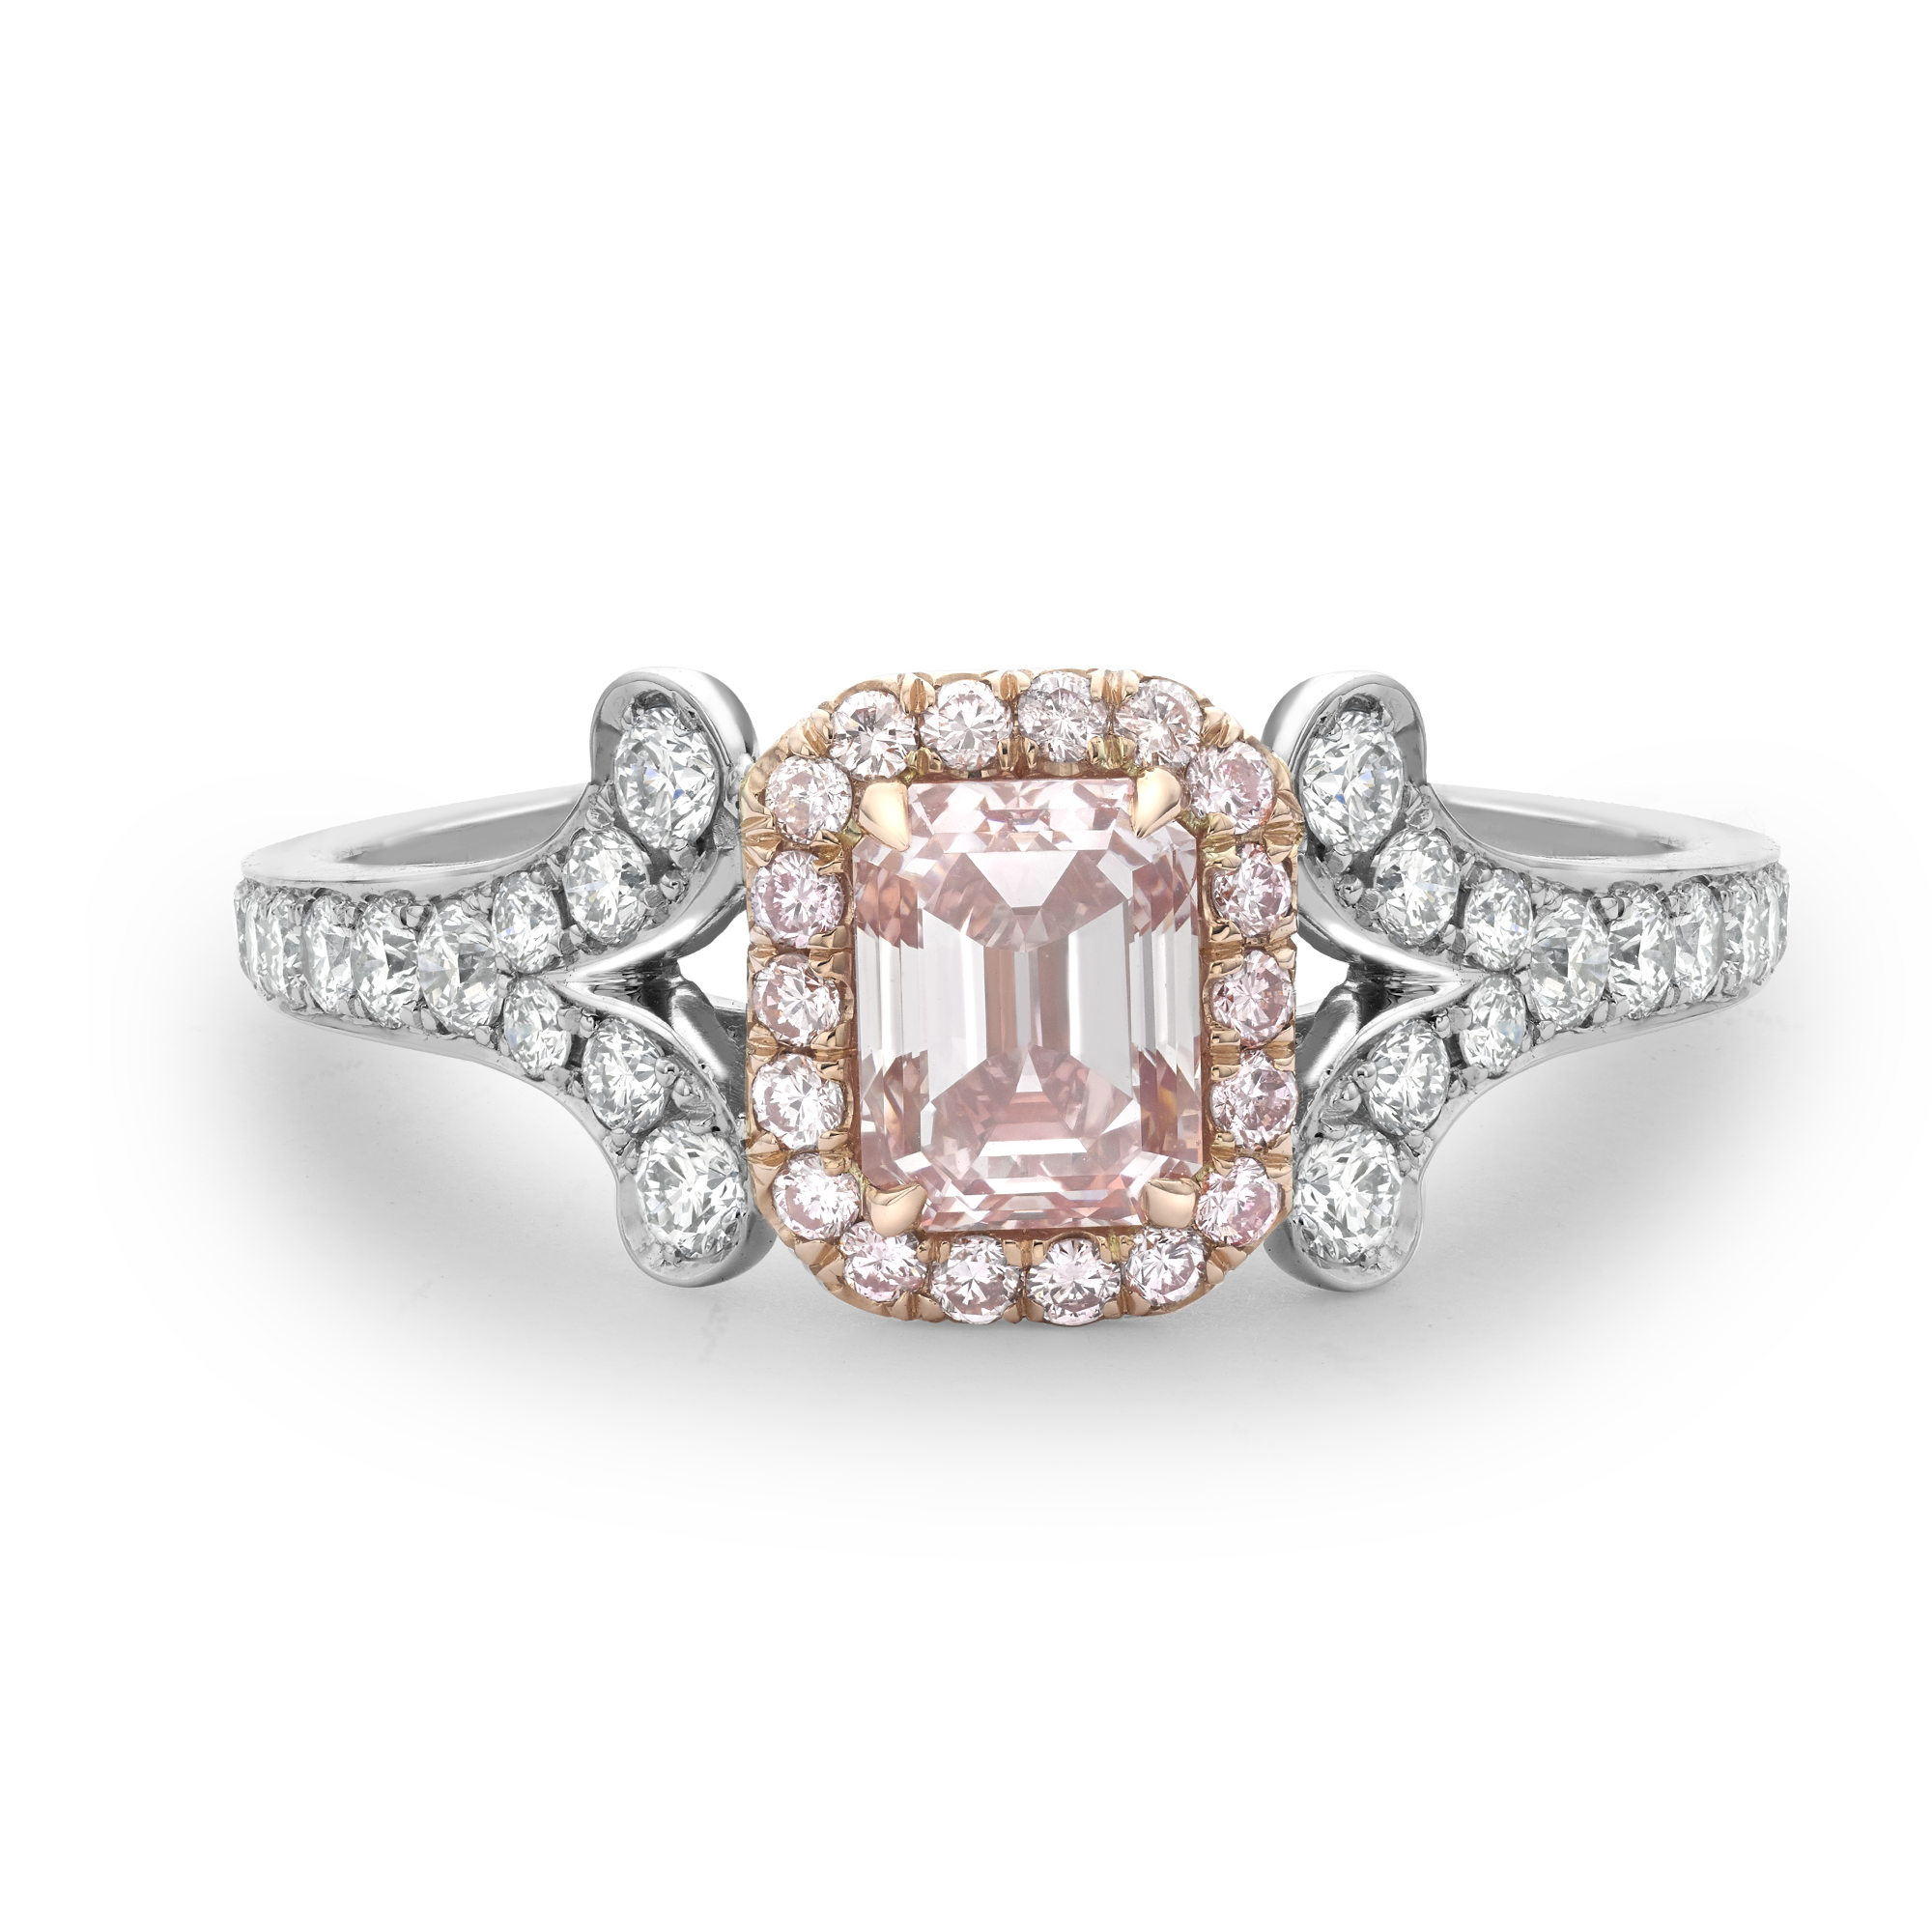 Masterpiece Cléo 0.63ct Fancy Intense Pink Diamond Cluster Ring Emerald Cut, Claw Set_2